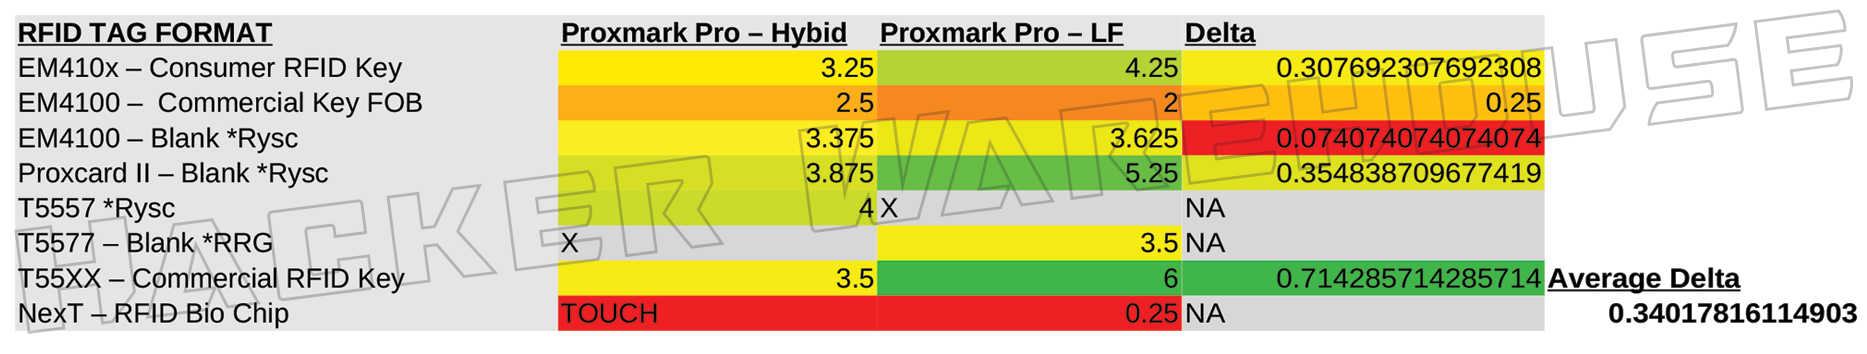 ProxmarkPro Hybird Antenna vs LF Antenna